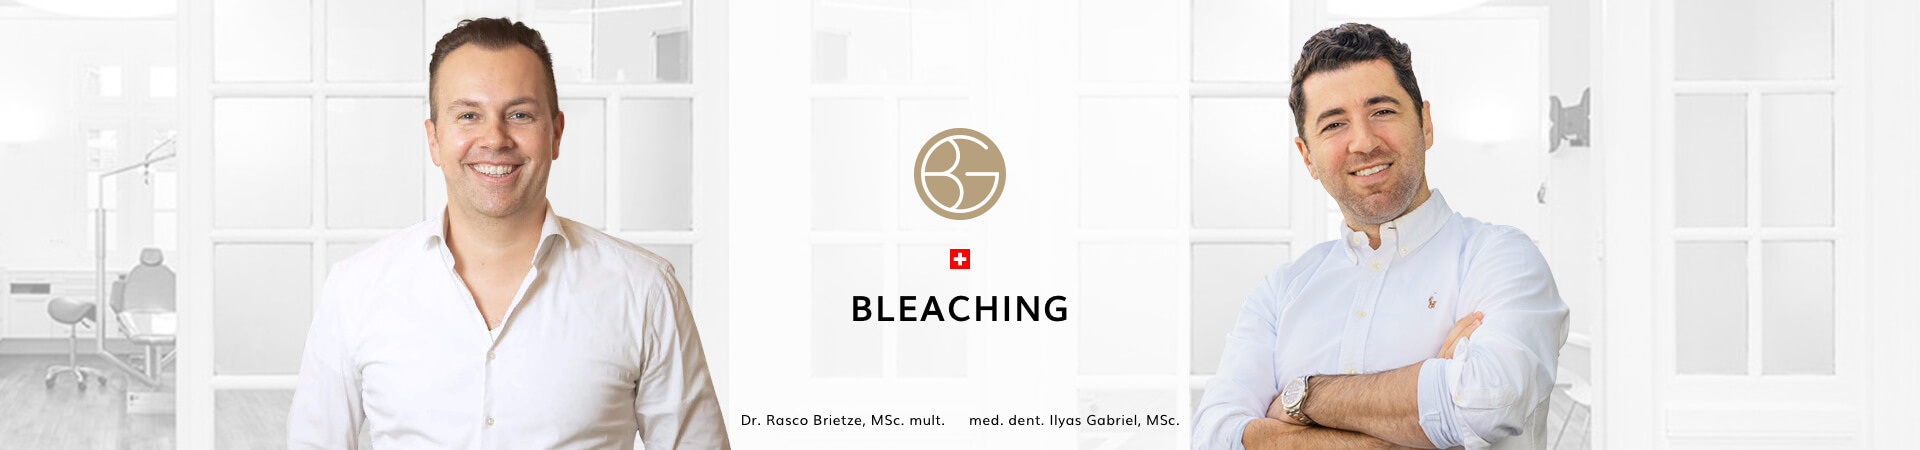 Bleaching, Zahnärzte Ebmatingen, Dr. Brietze & Dr. Gabriel 